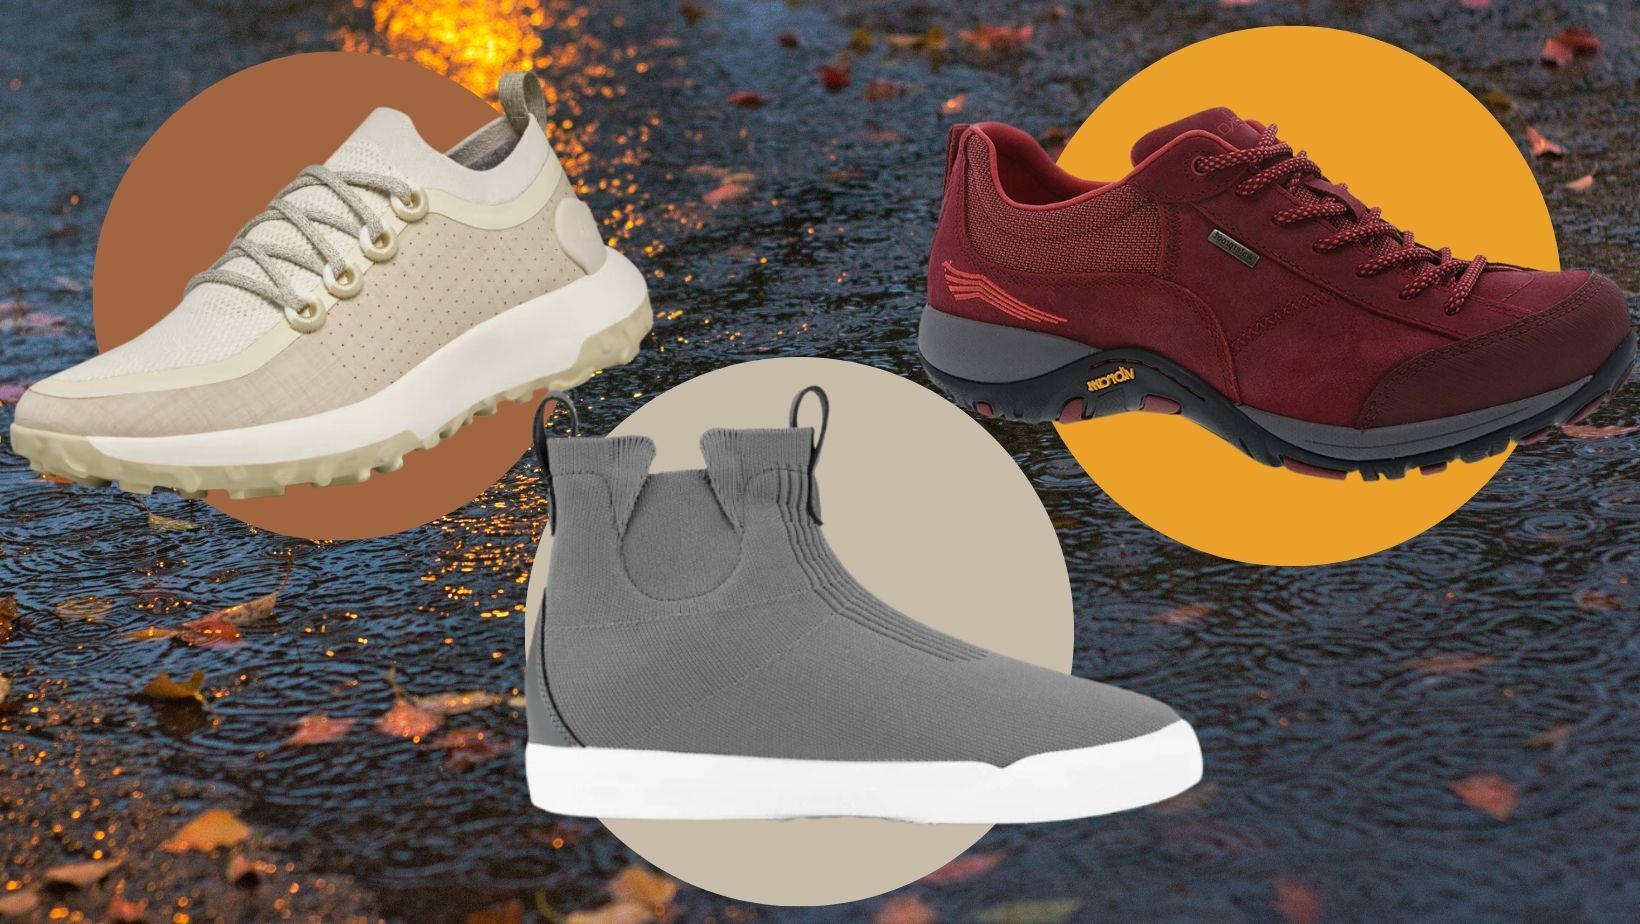 Shoes: Water Resistant vs. Waterproof | Nordstrom Expert Tips - YouTube